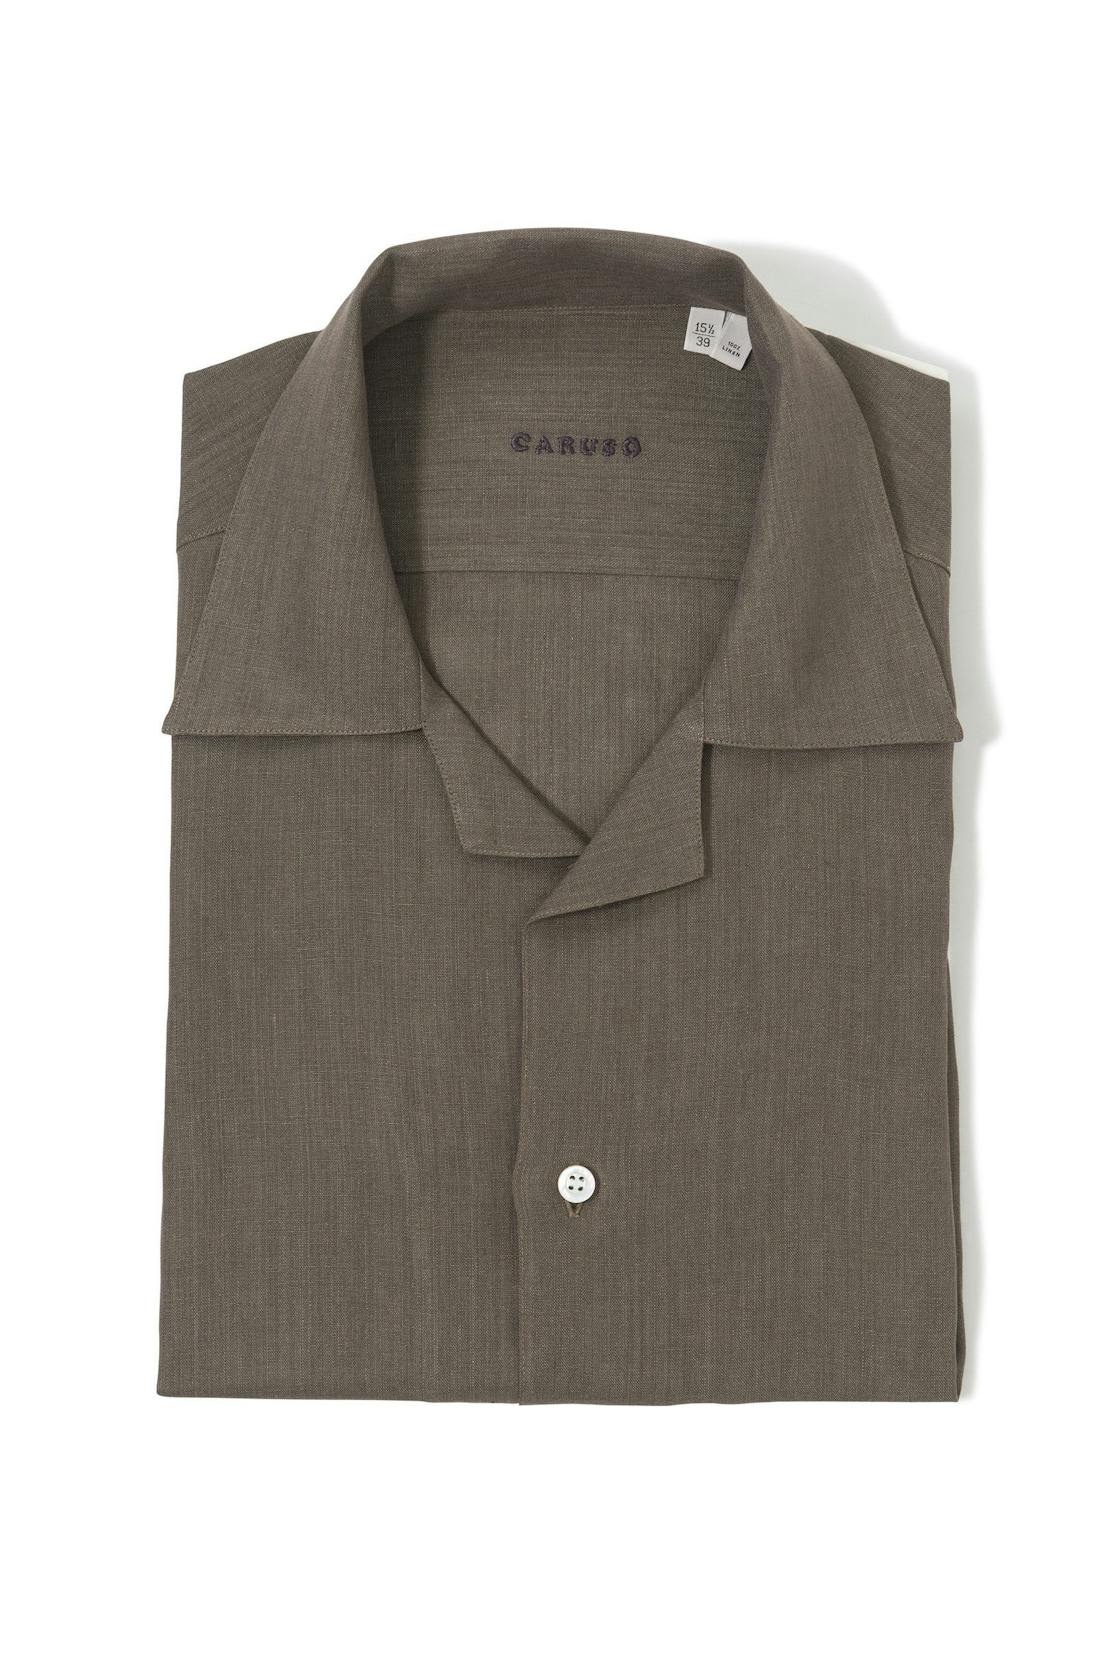 Caruso Khaki Linen Short Sleeve Shirt